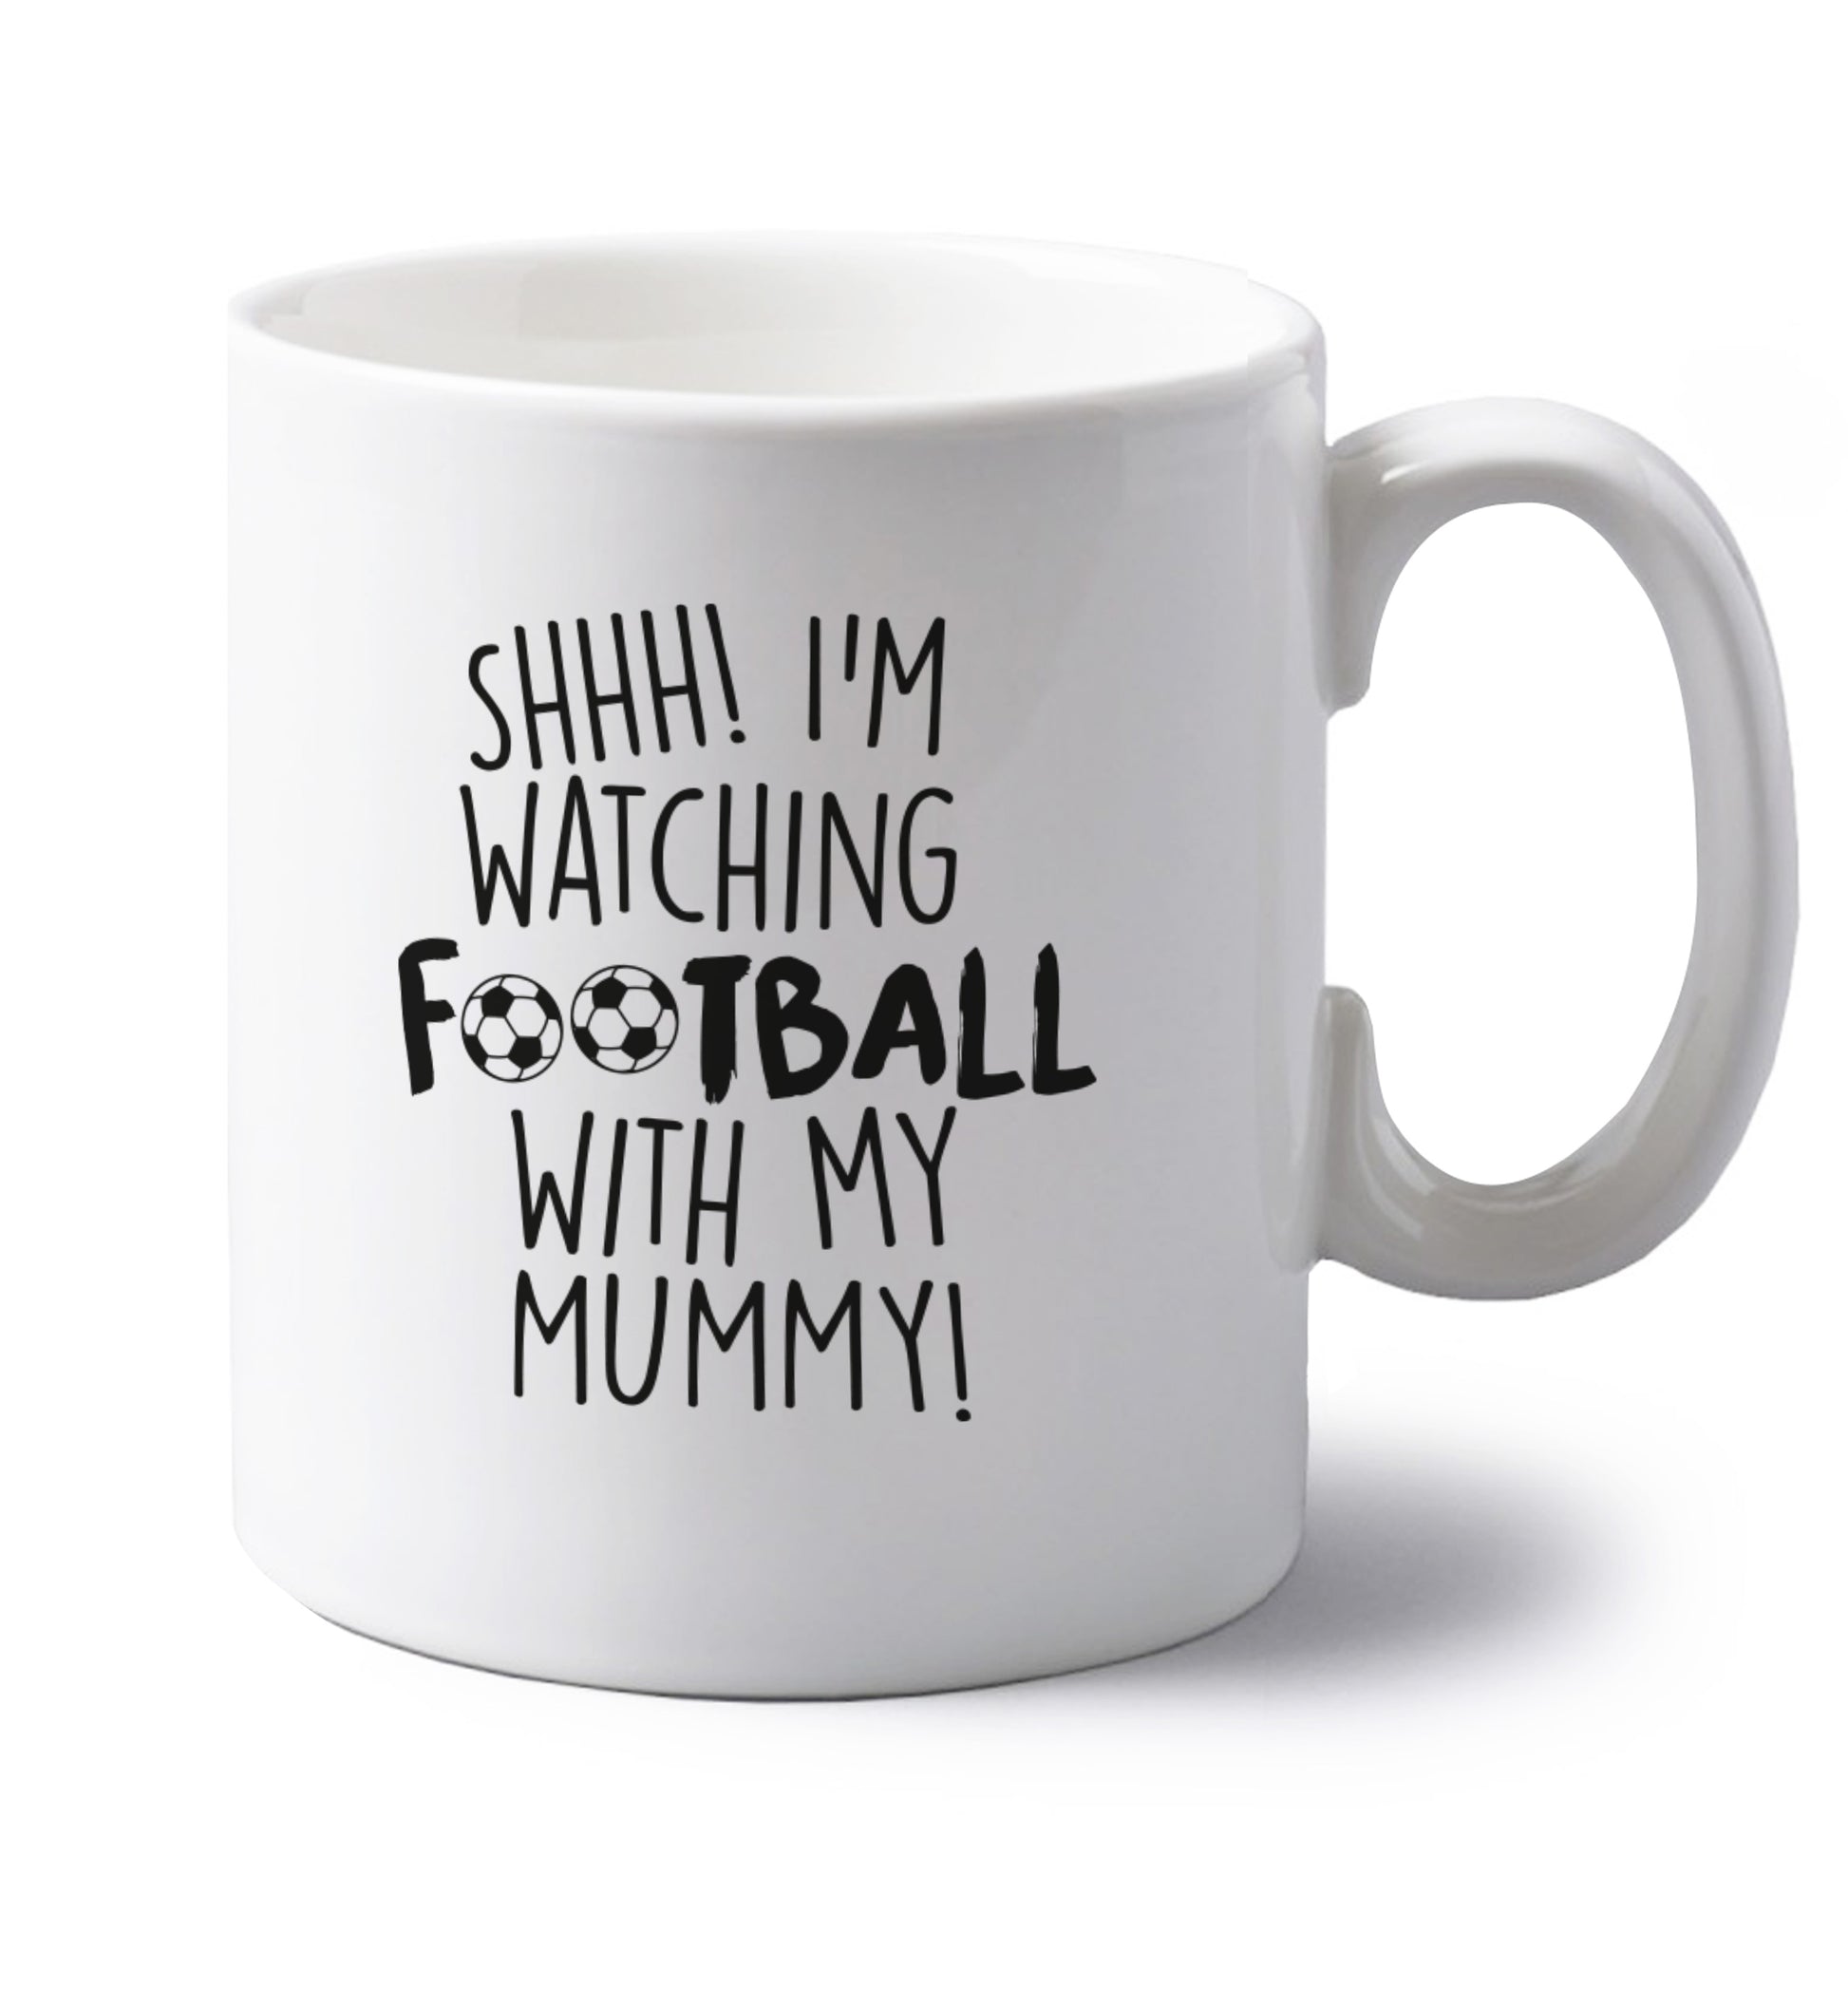 Shhh I'm watching football with my mummy left handed white ceramic mug 